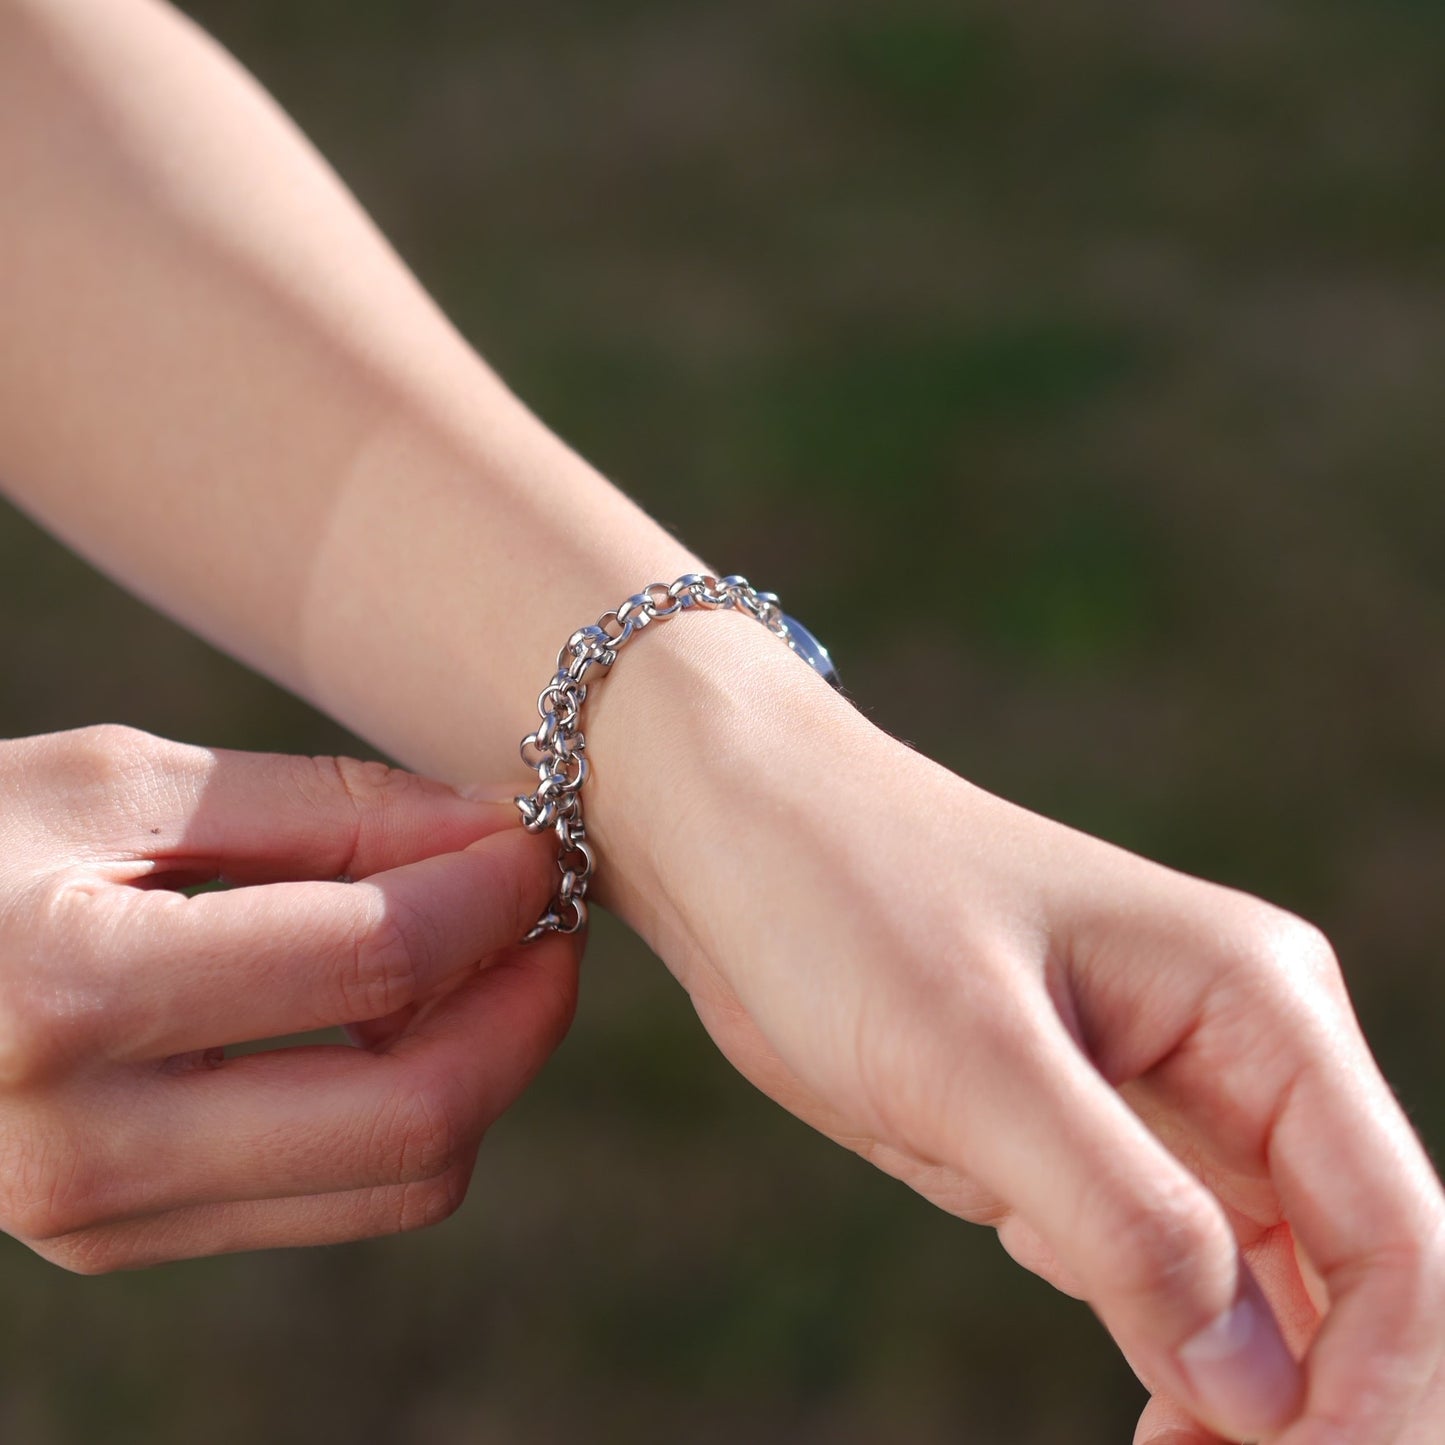 Lily Aromatherapy Diffuser Bracelet